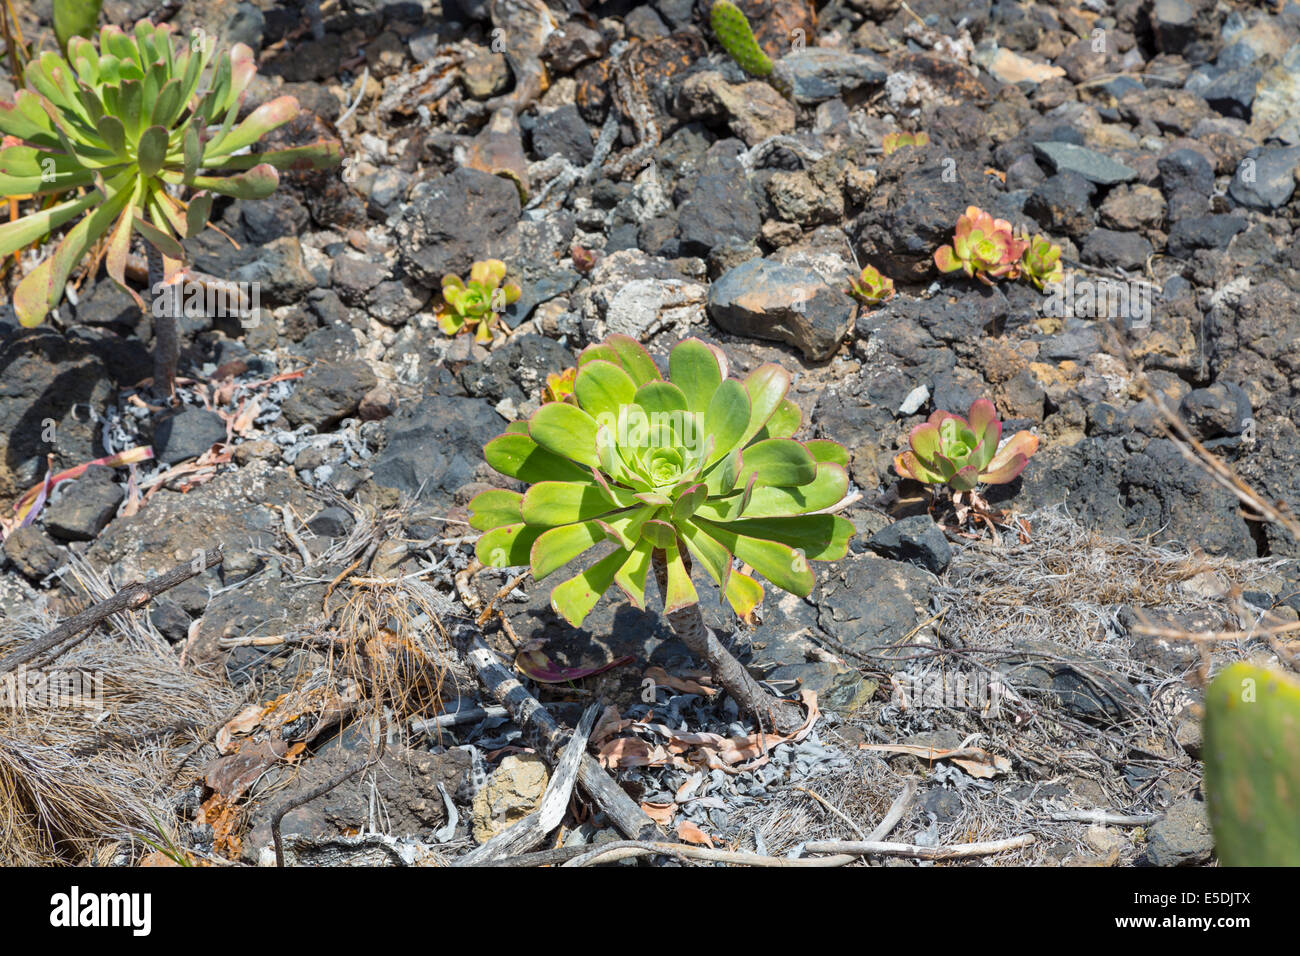 Spain, Canary Islands, Tenerife, Aeonium undulatum Stock Photo